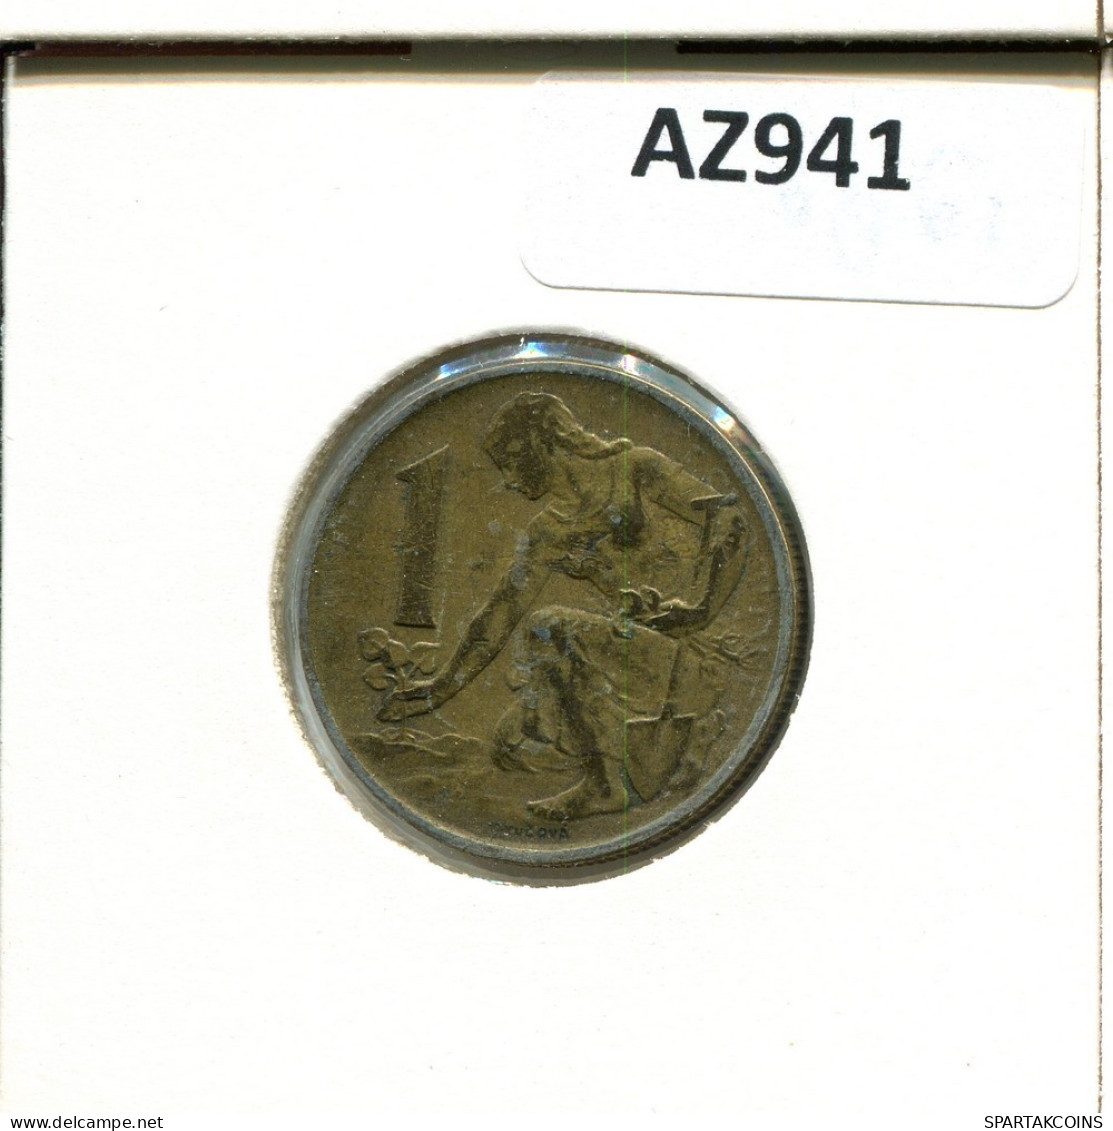 1 KORUNA 1980 CZECHOSLOVAKIA Coin #AZ941.U.A - Tschechoslowakei